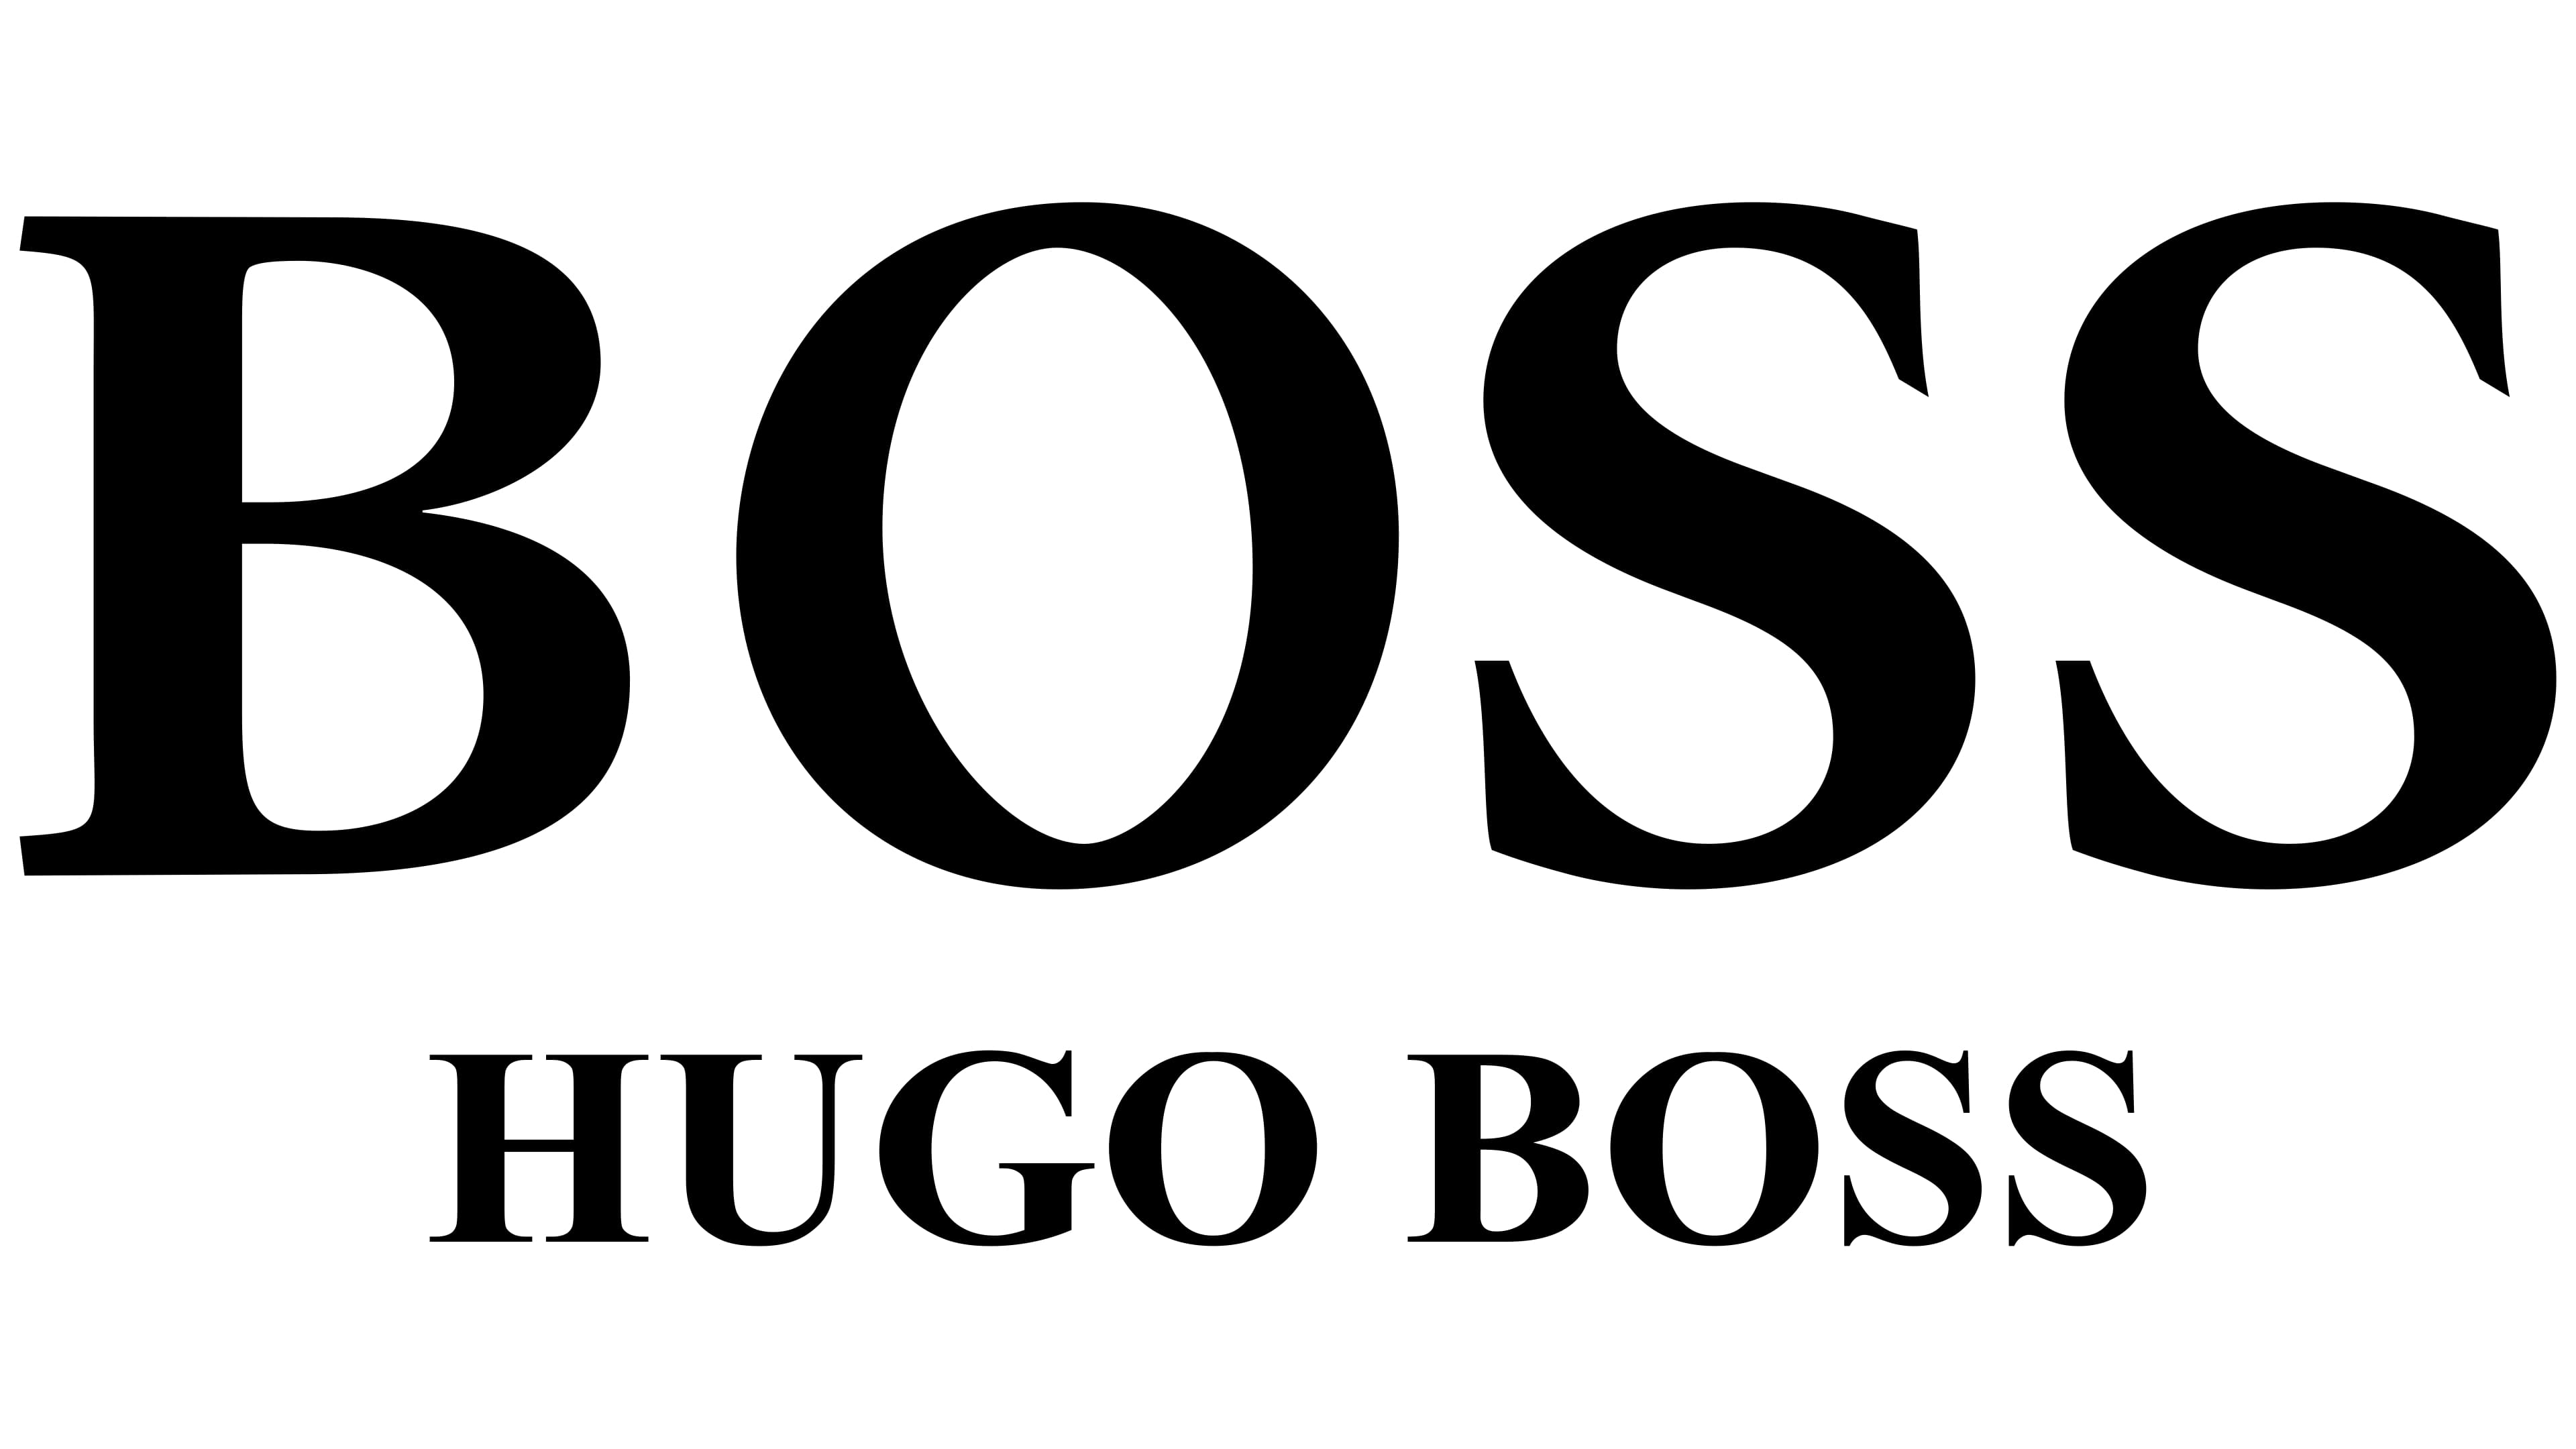 Hugo Boss logo and symbol, meaning 